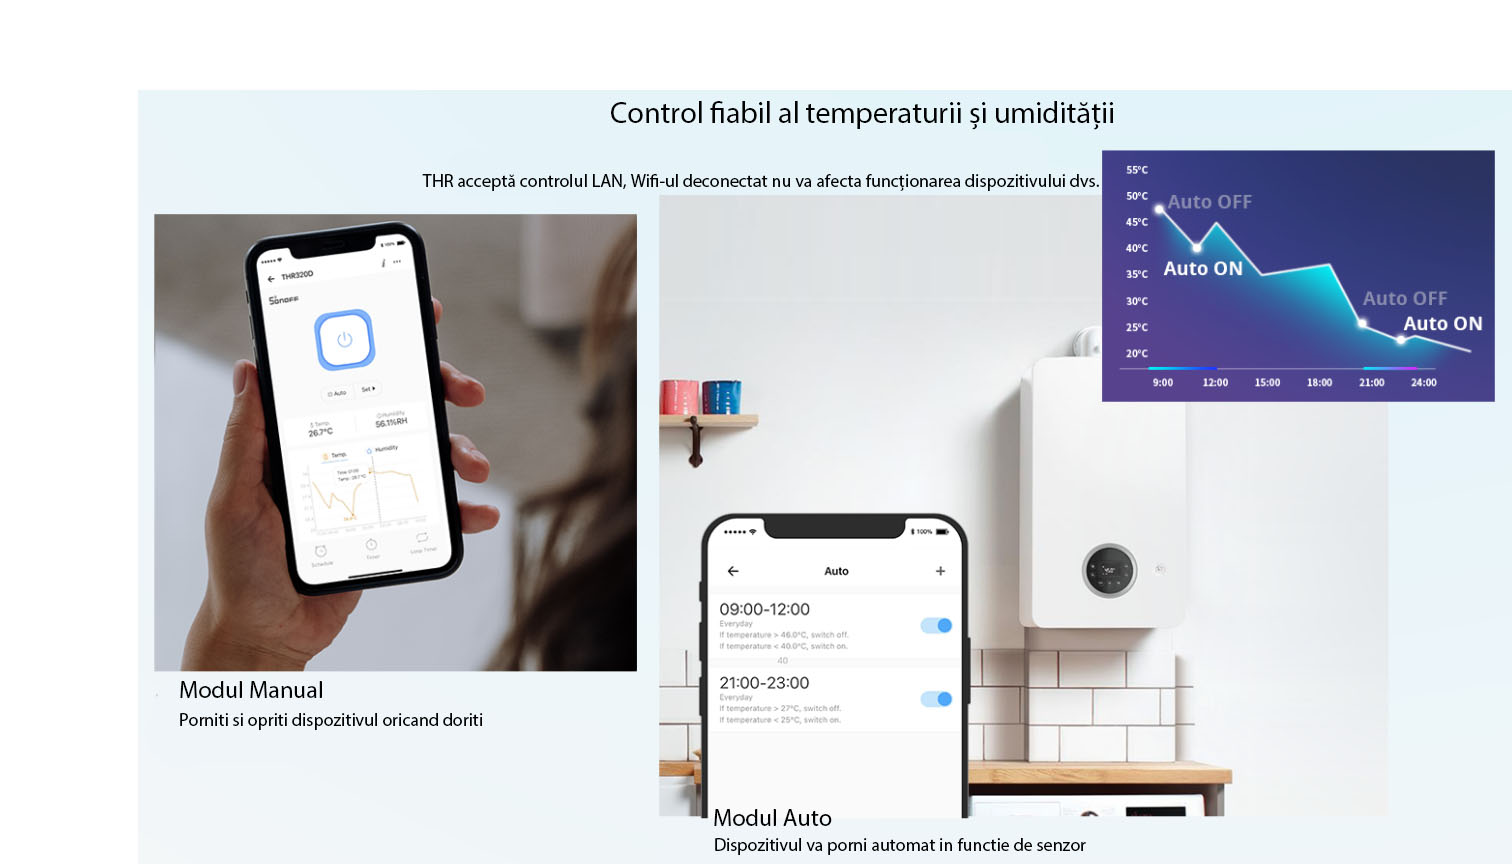 Releu inteligent Wi-Fi Sonoff THR316D, Temperatura & umiditate, Monitor LCD